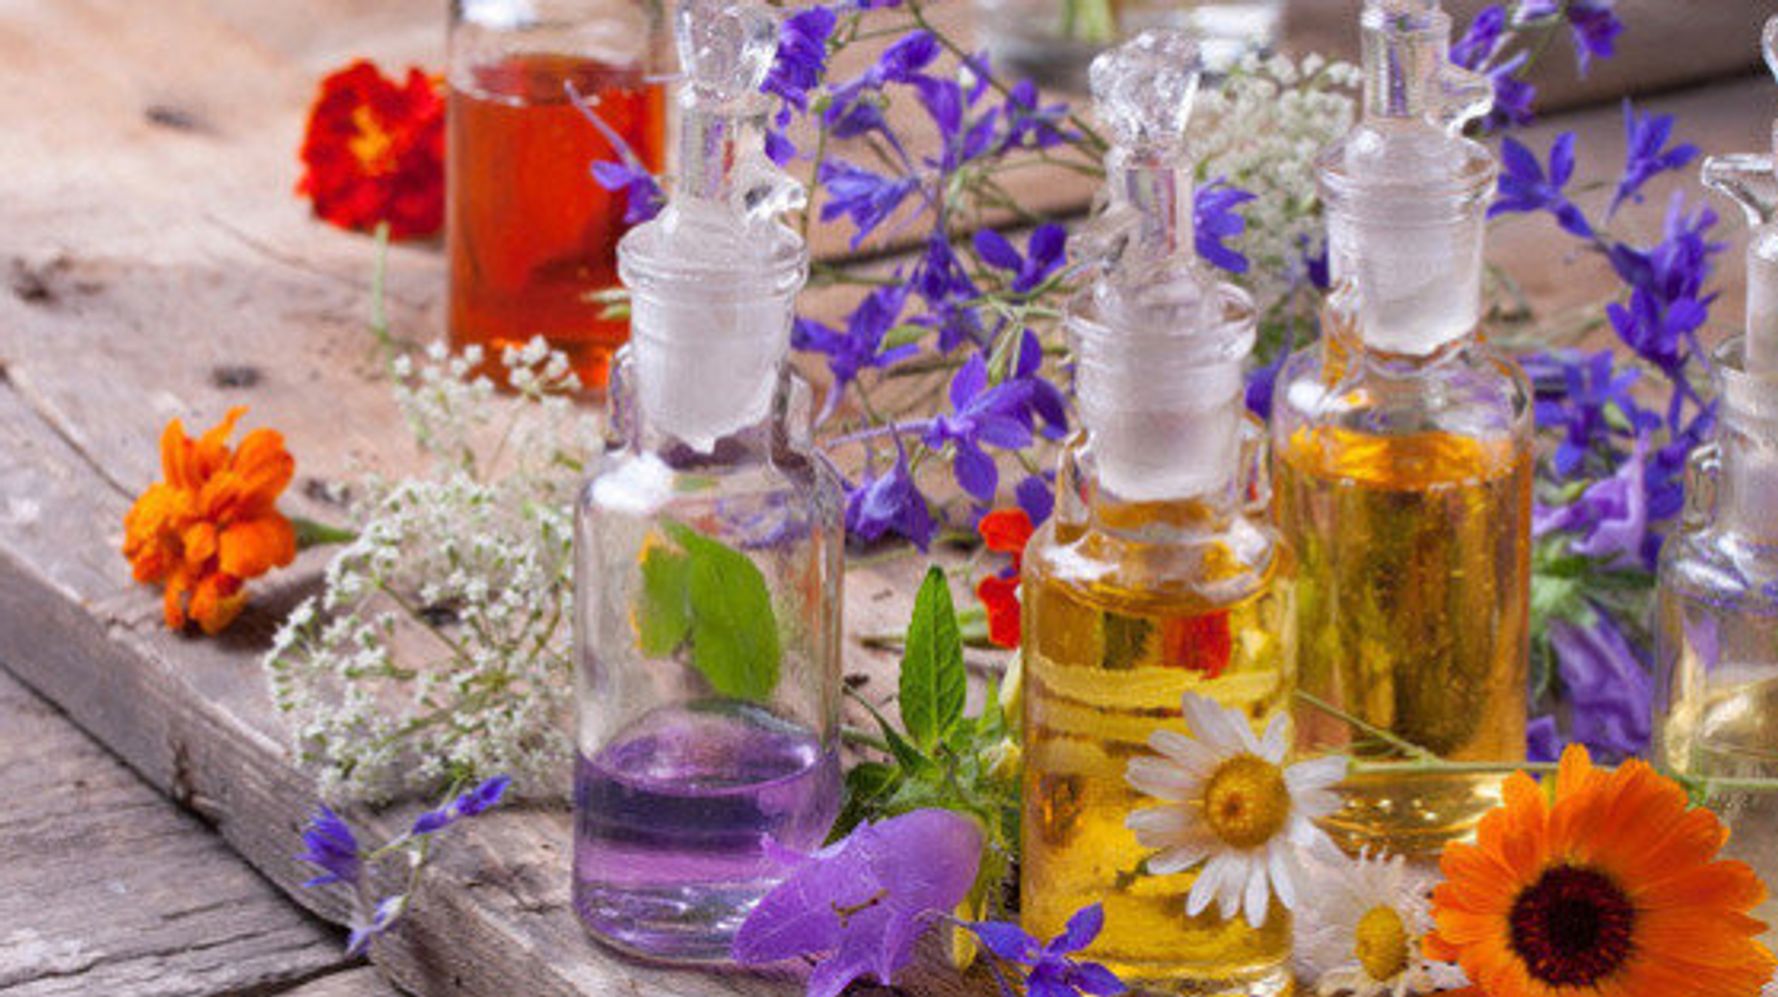 benefits of essential oils,best essential oils,essential oil uses,essen...